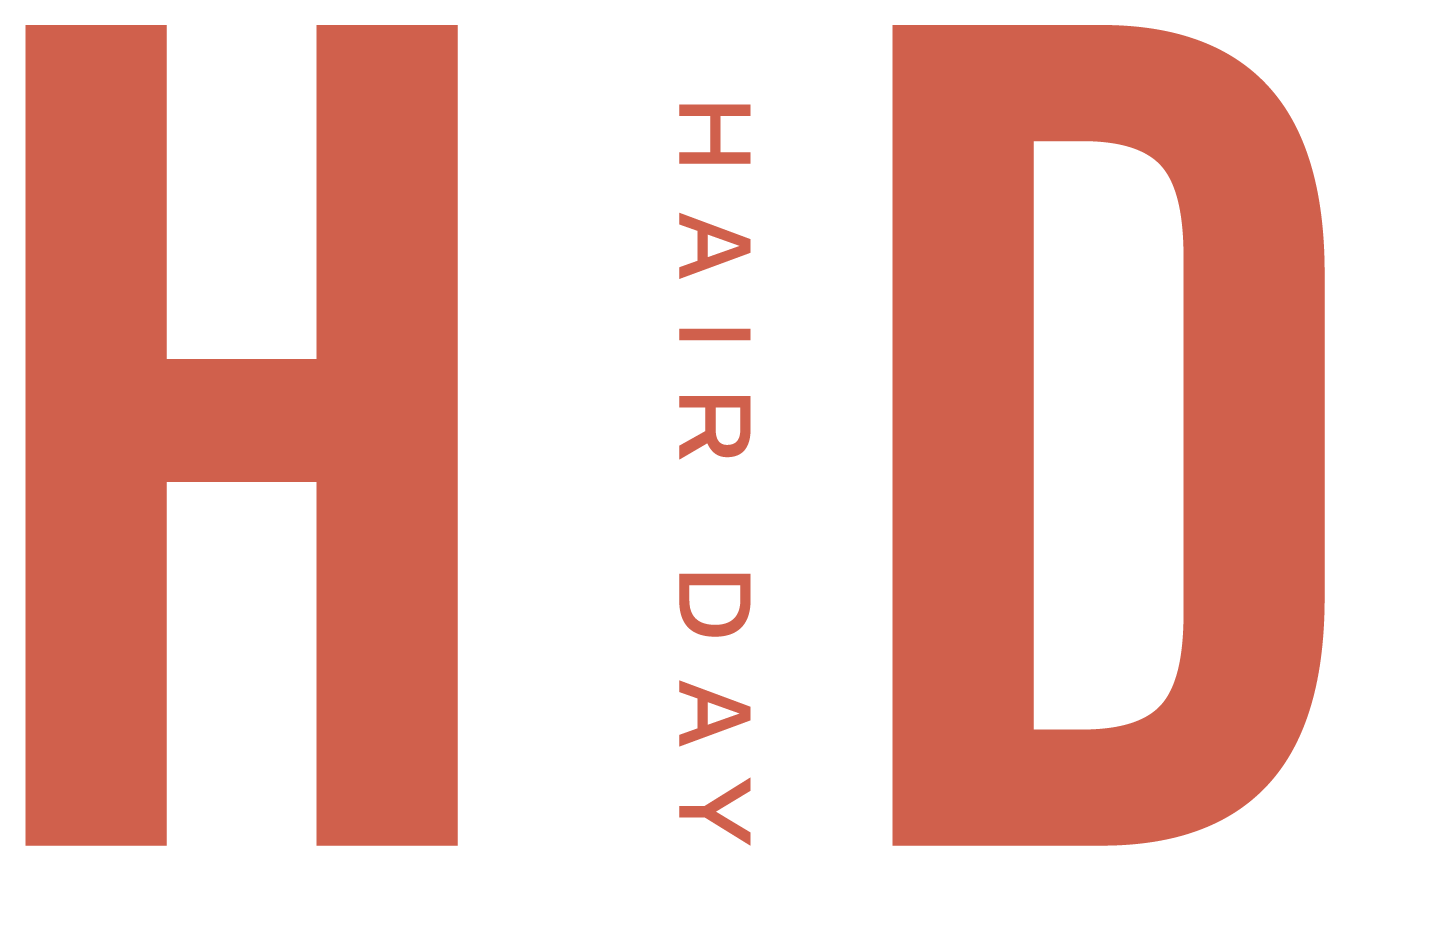 Hair Day copyright